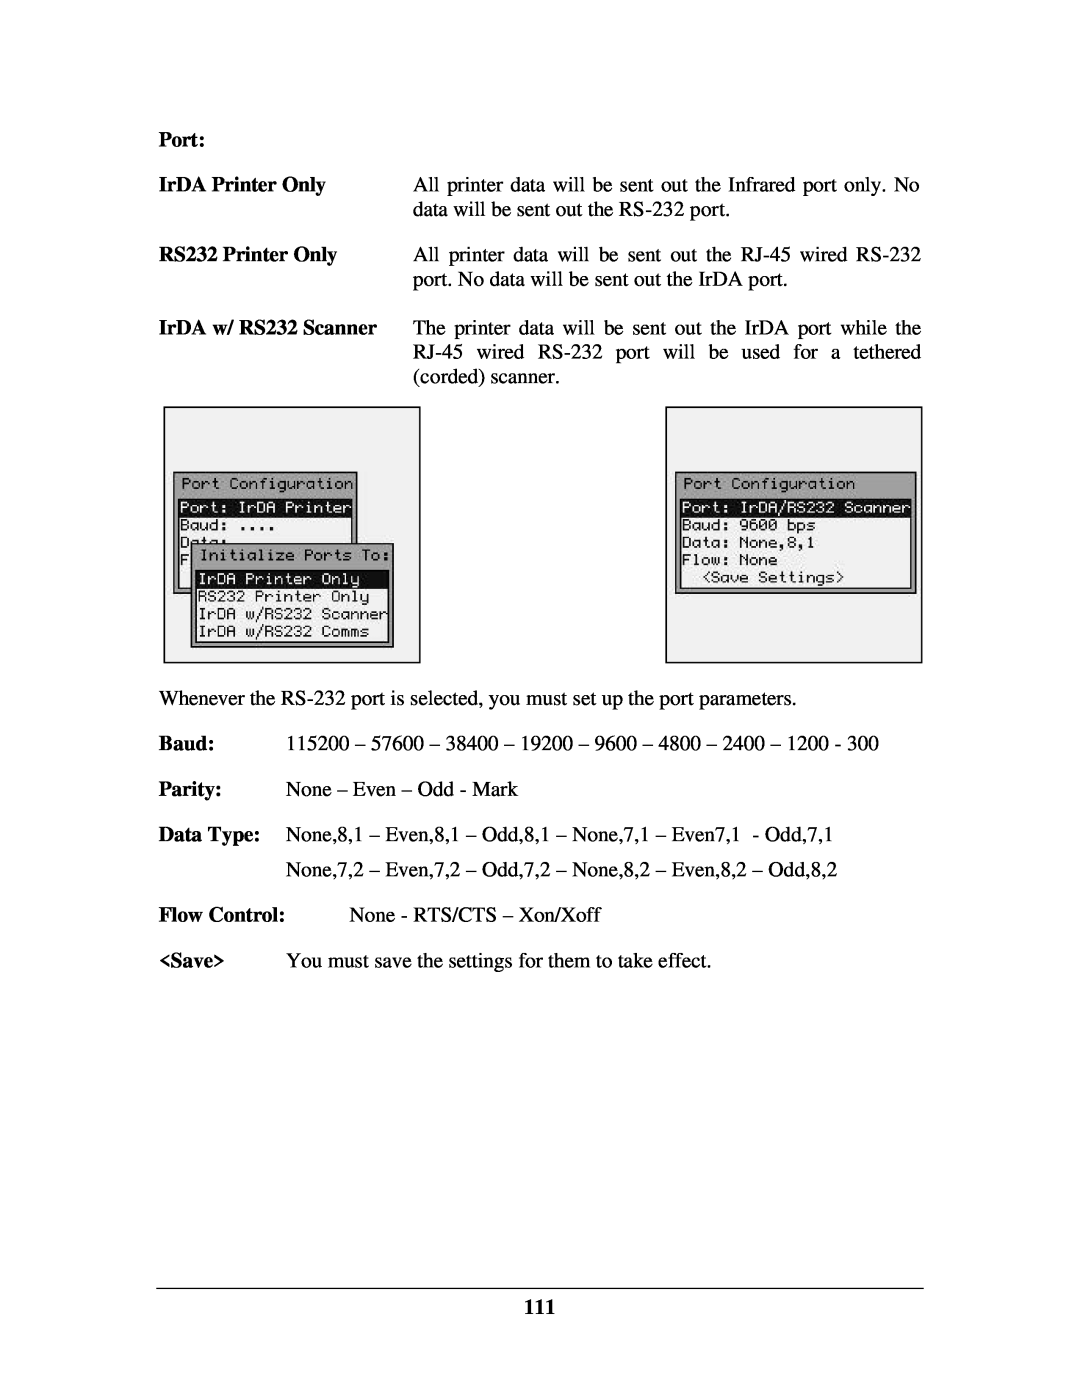 IBM M71V2 manual Port, IrDA Printer Only, RS232 Printer Only, IrDA w/ RS232 Scanner 